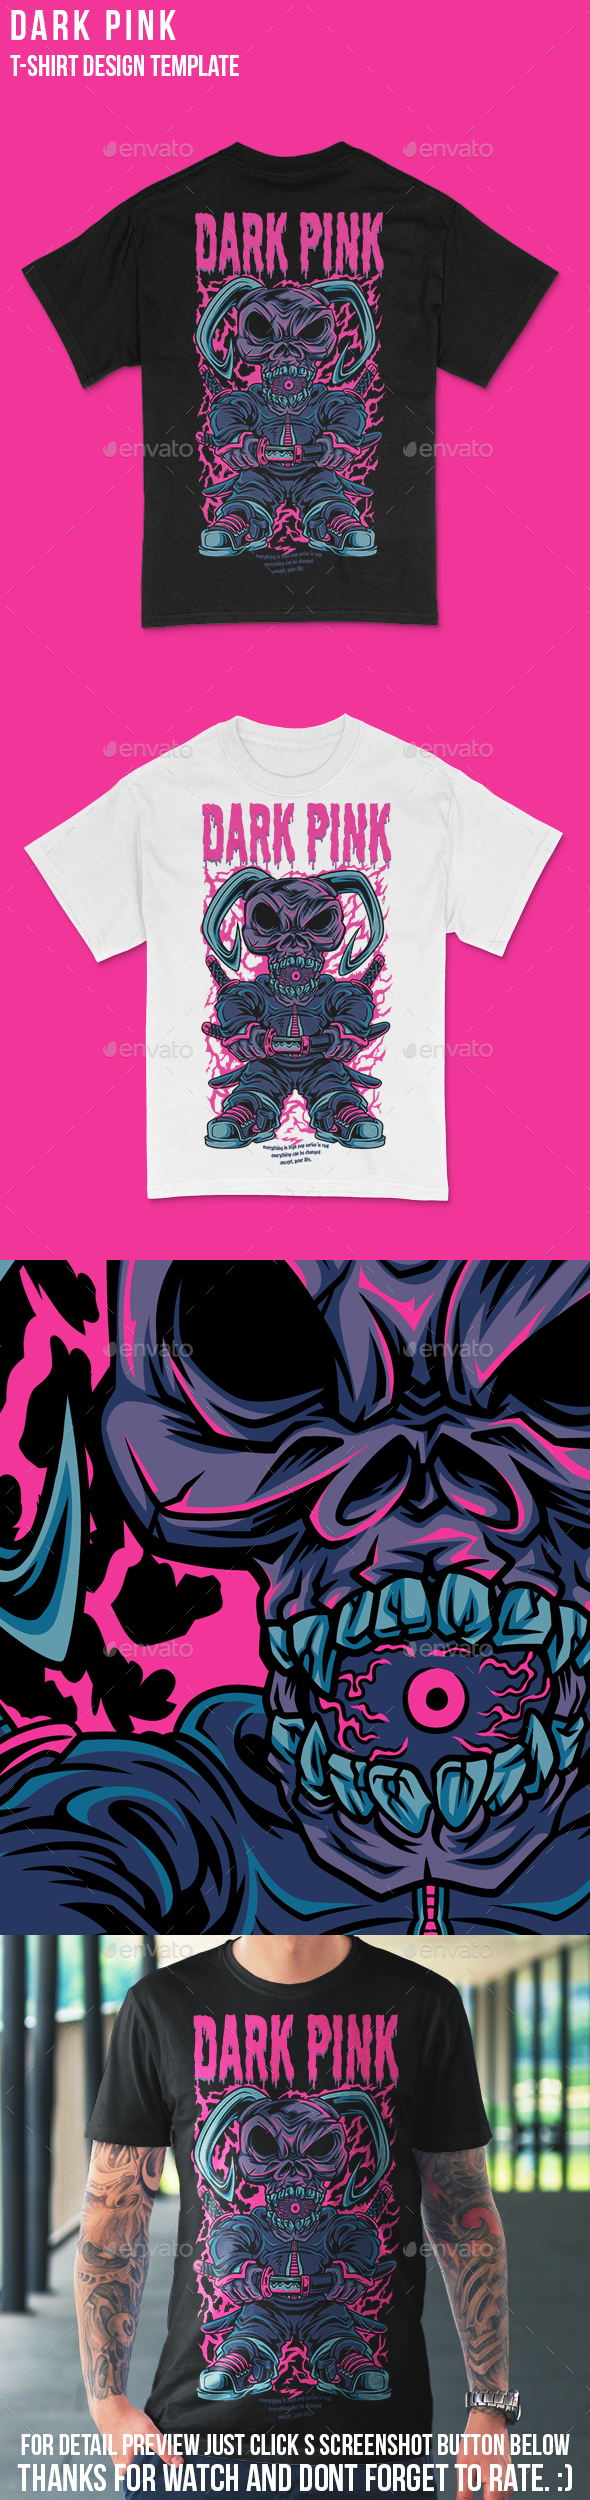 [DOWNLOAD]Dark Pink T-Shirt Design Template